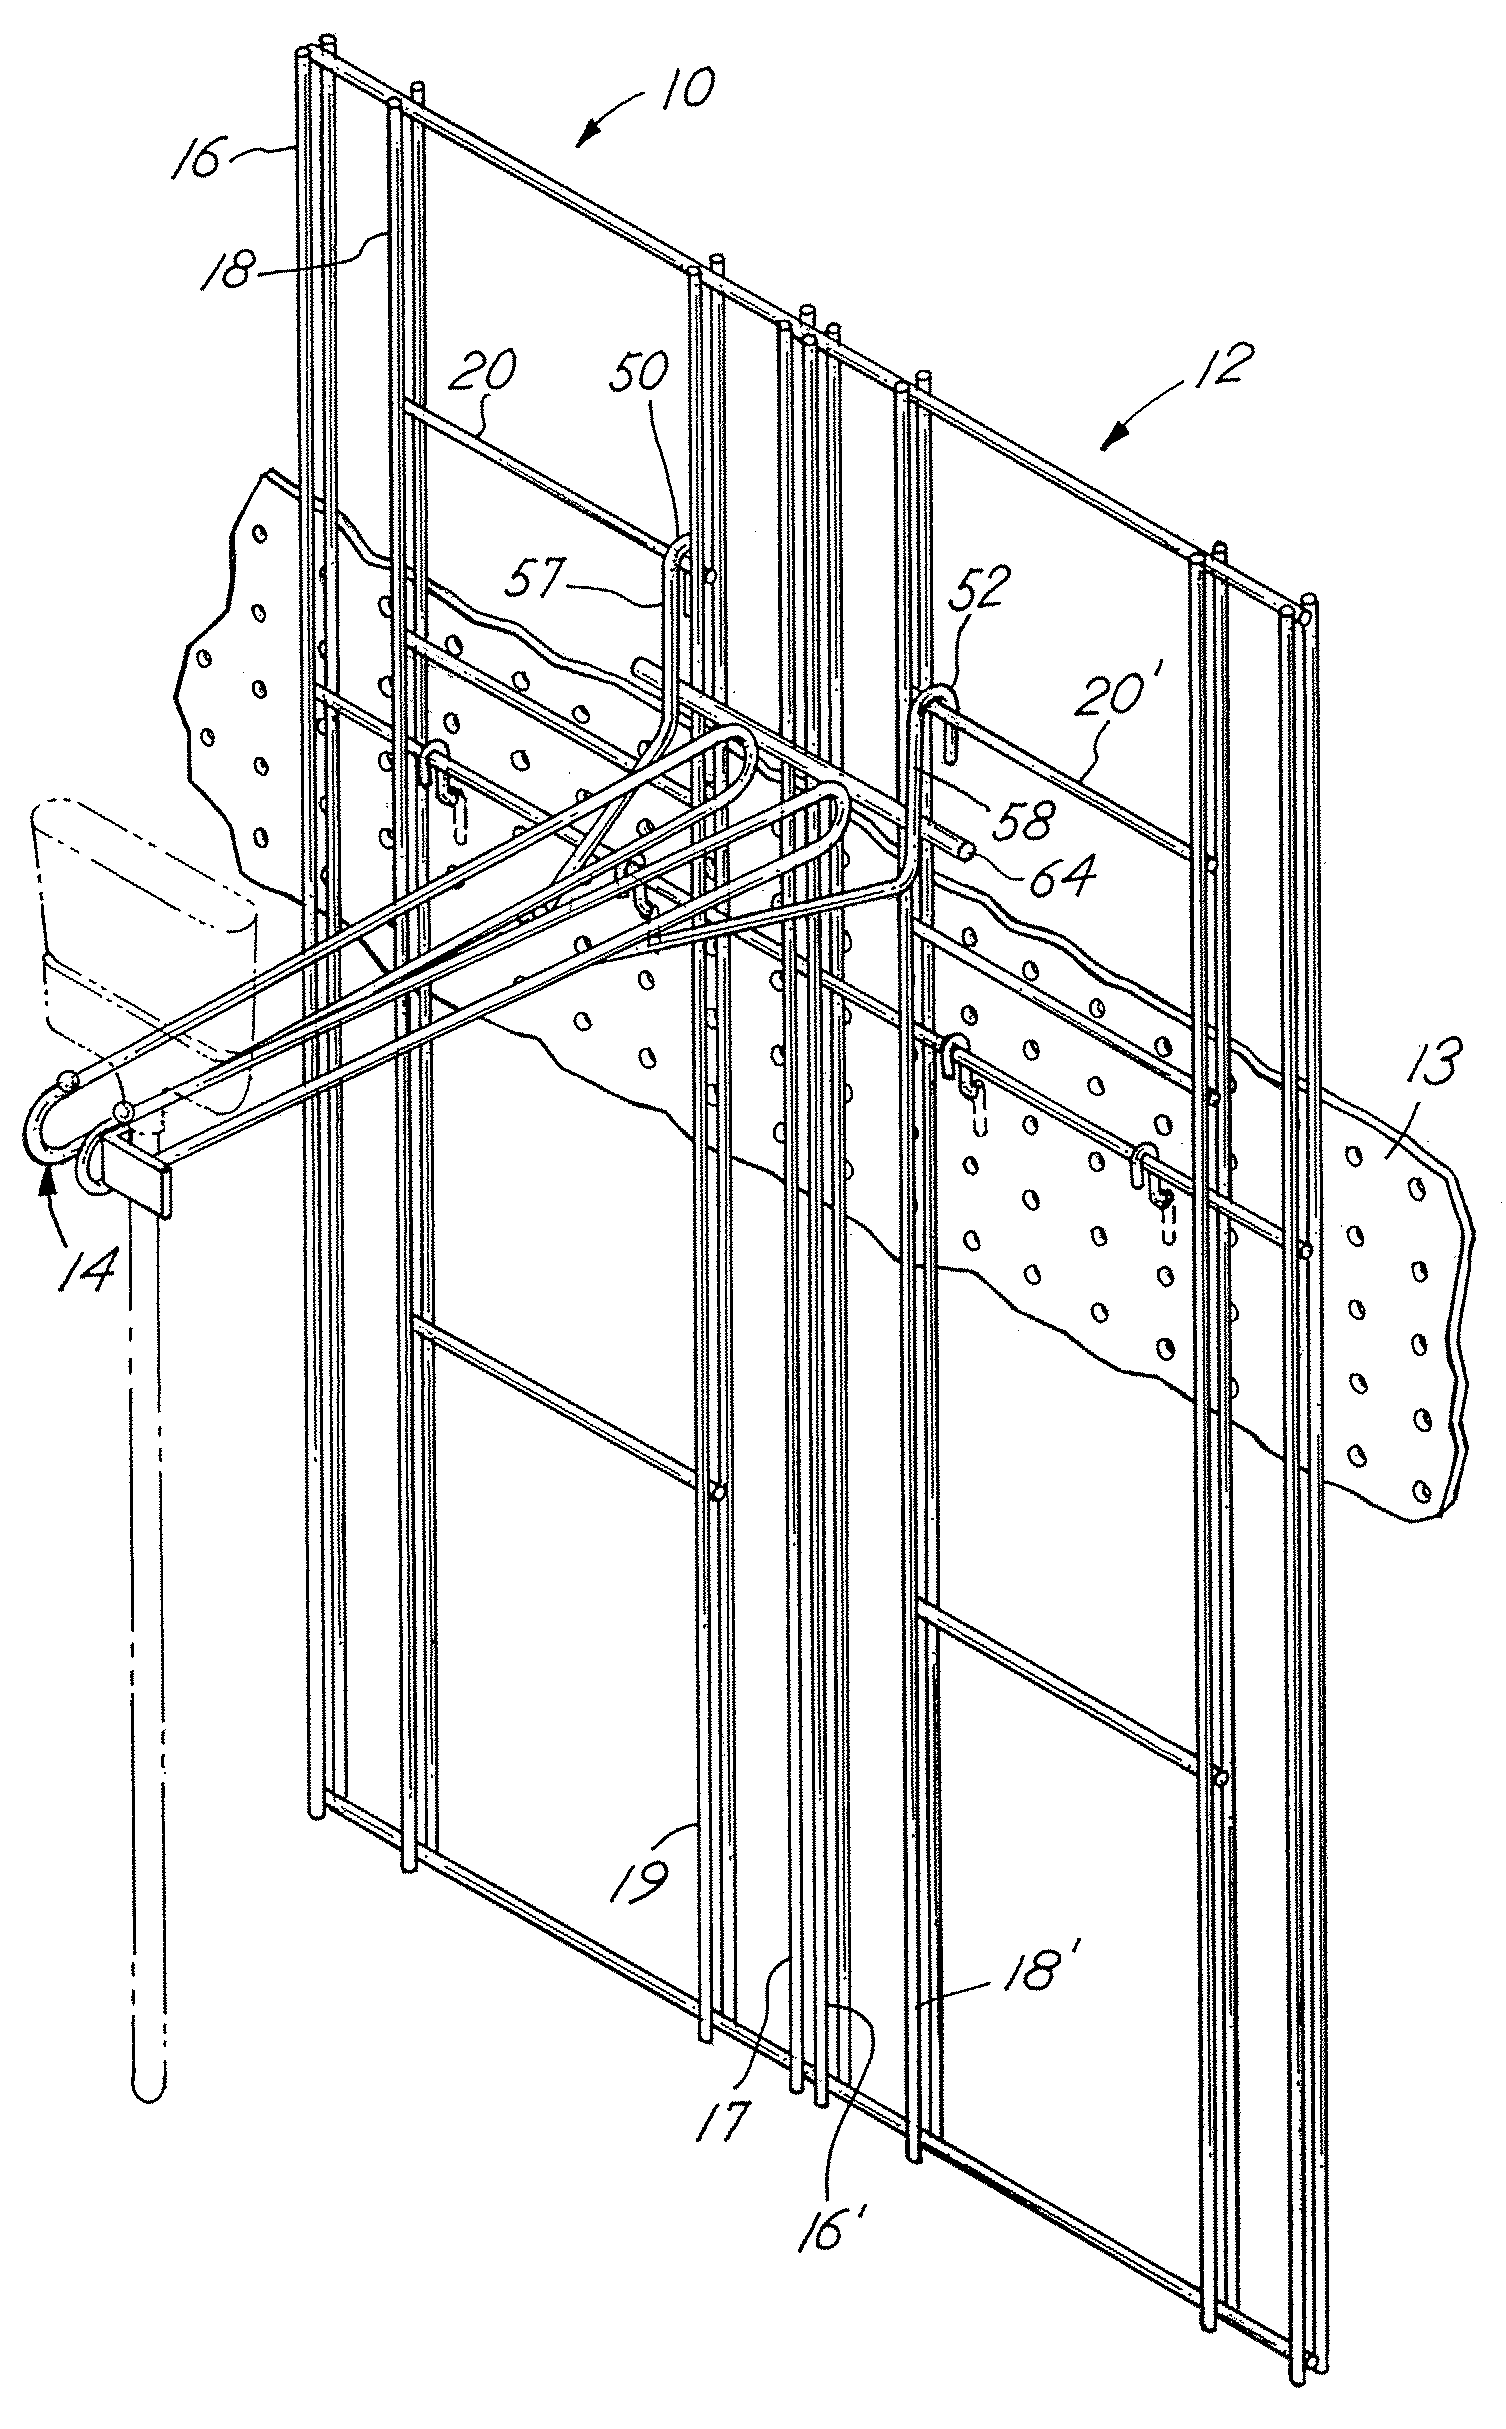 Display rack construction